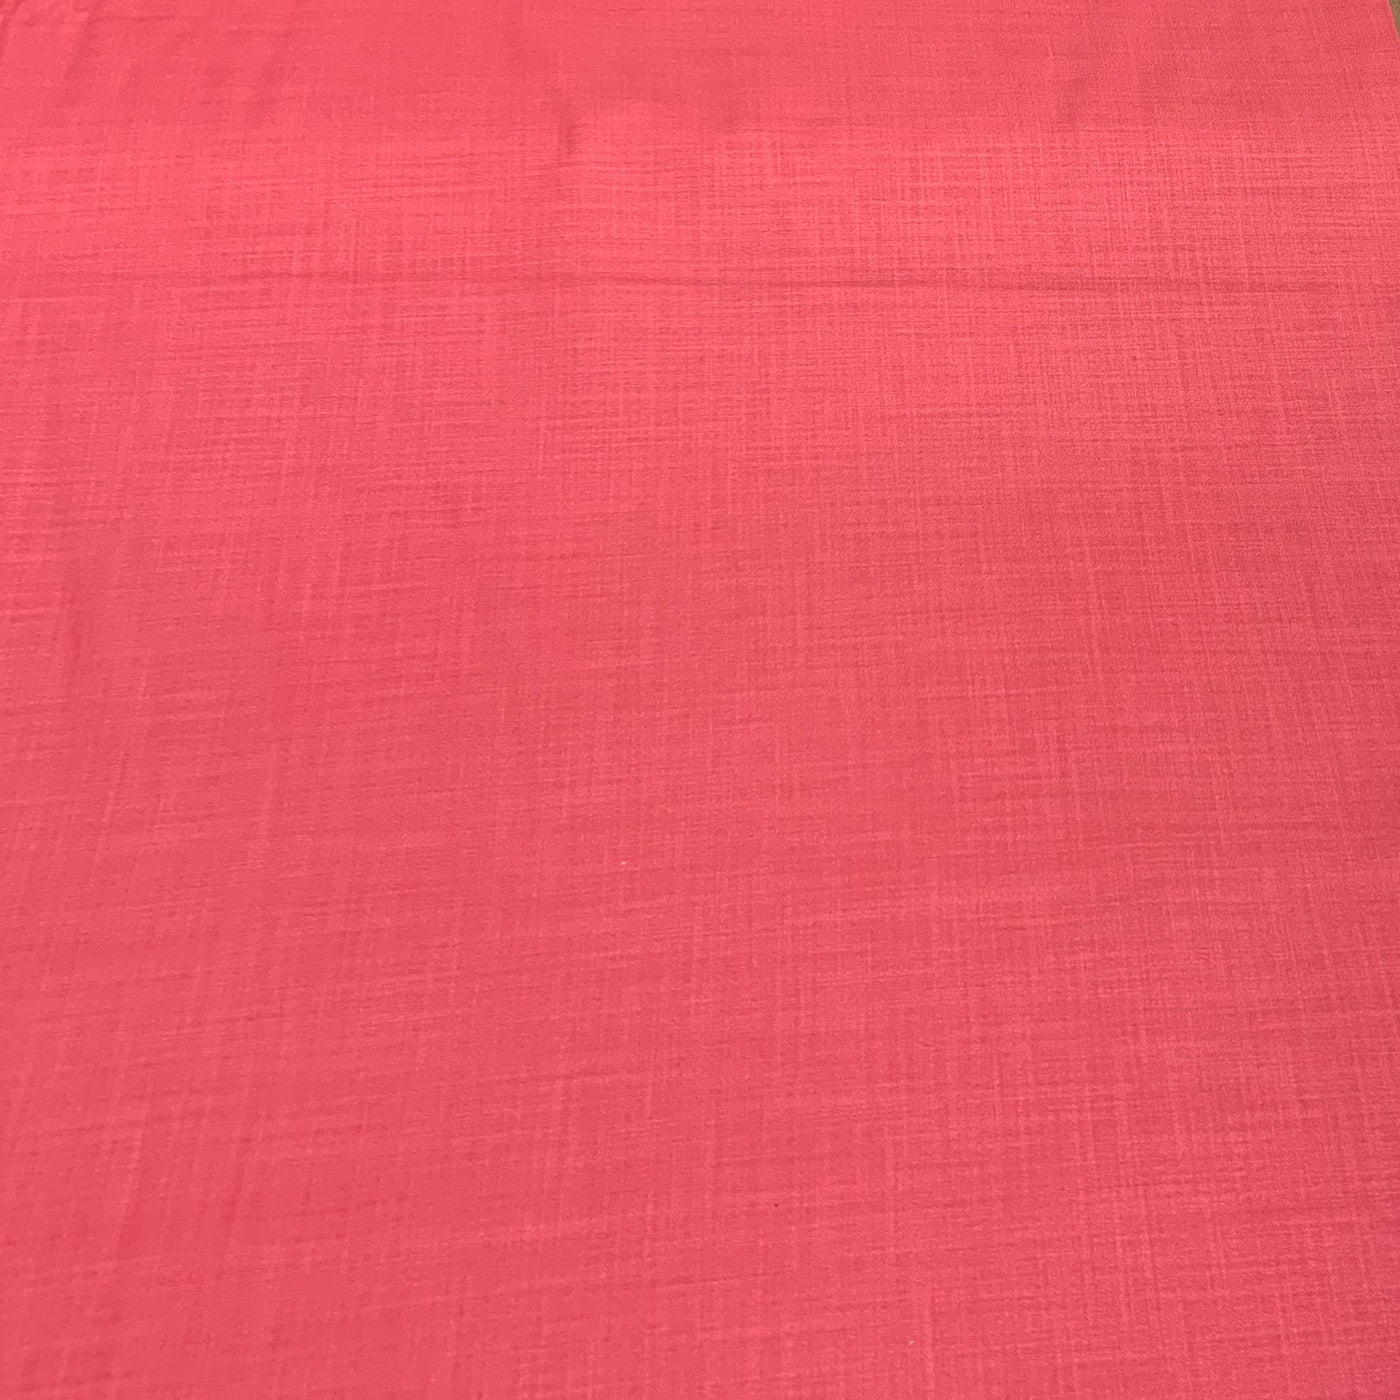 Carrot Pink Plain Cotton Matka Fabric